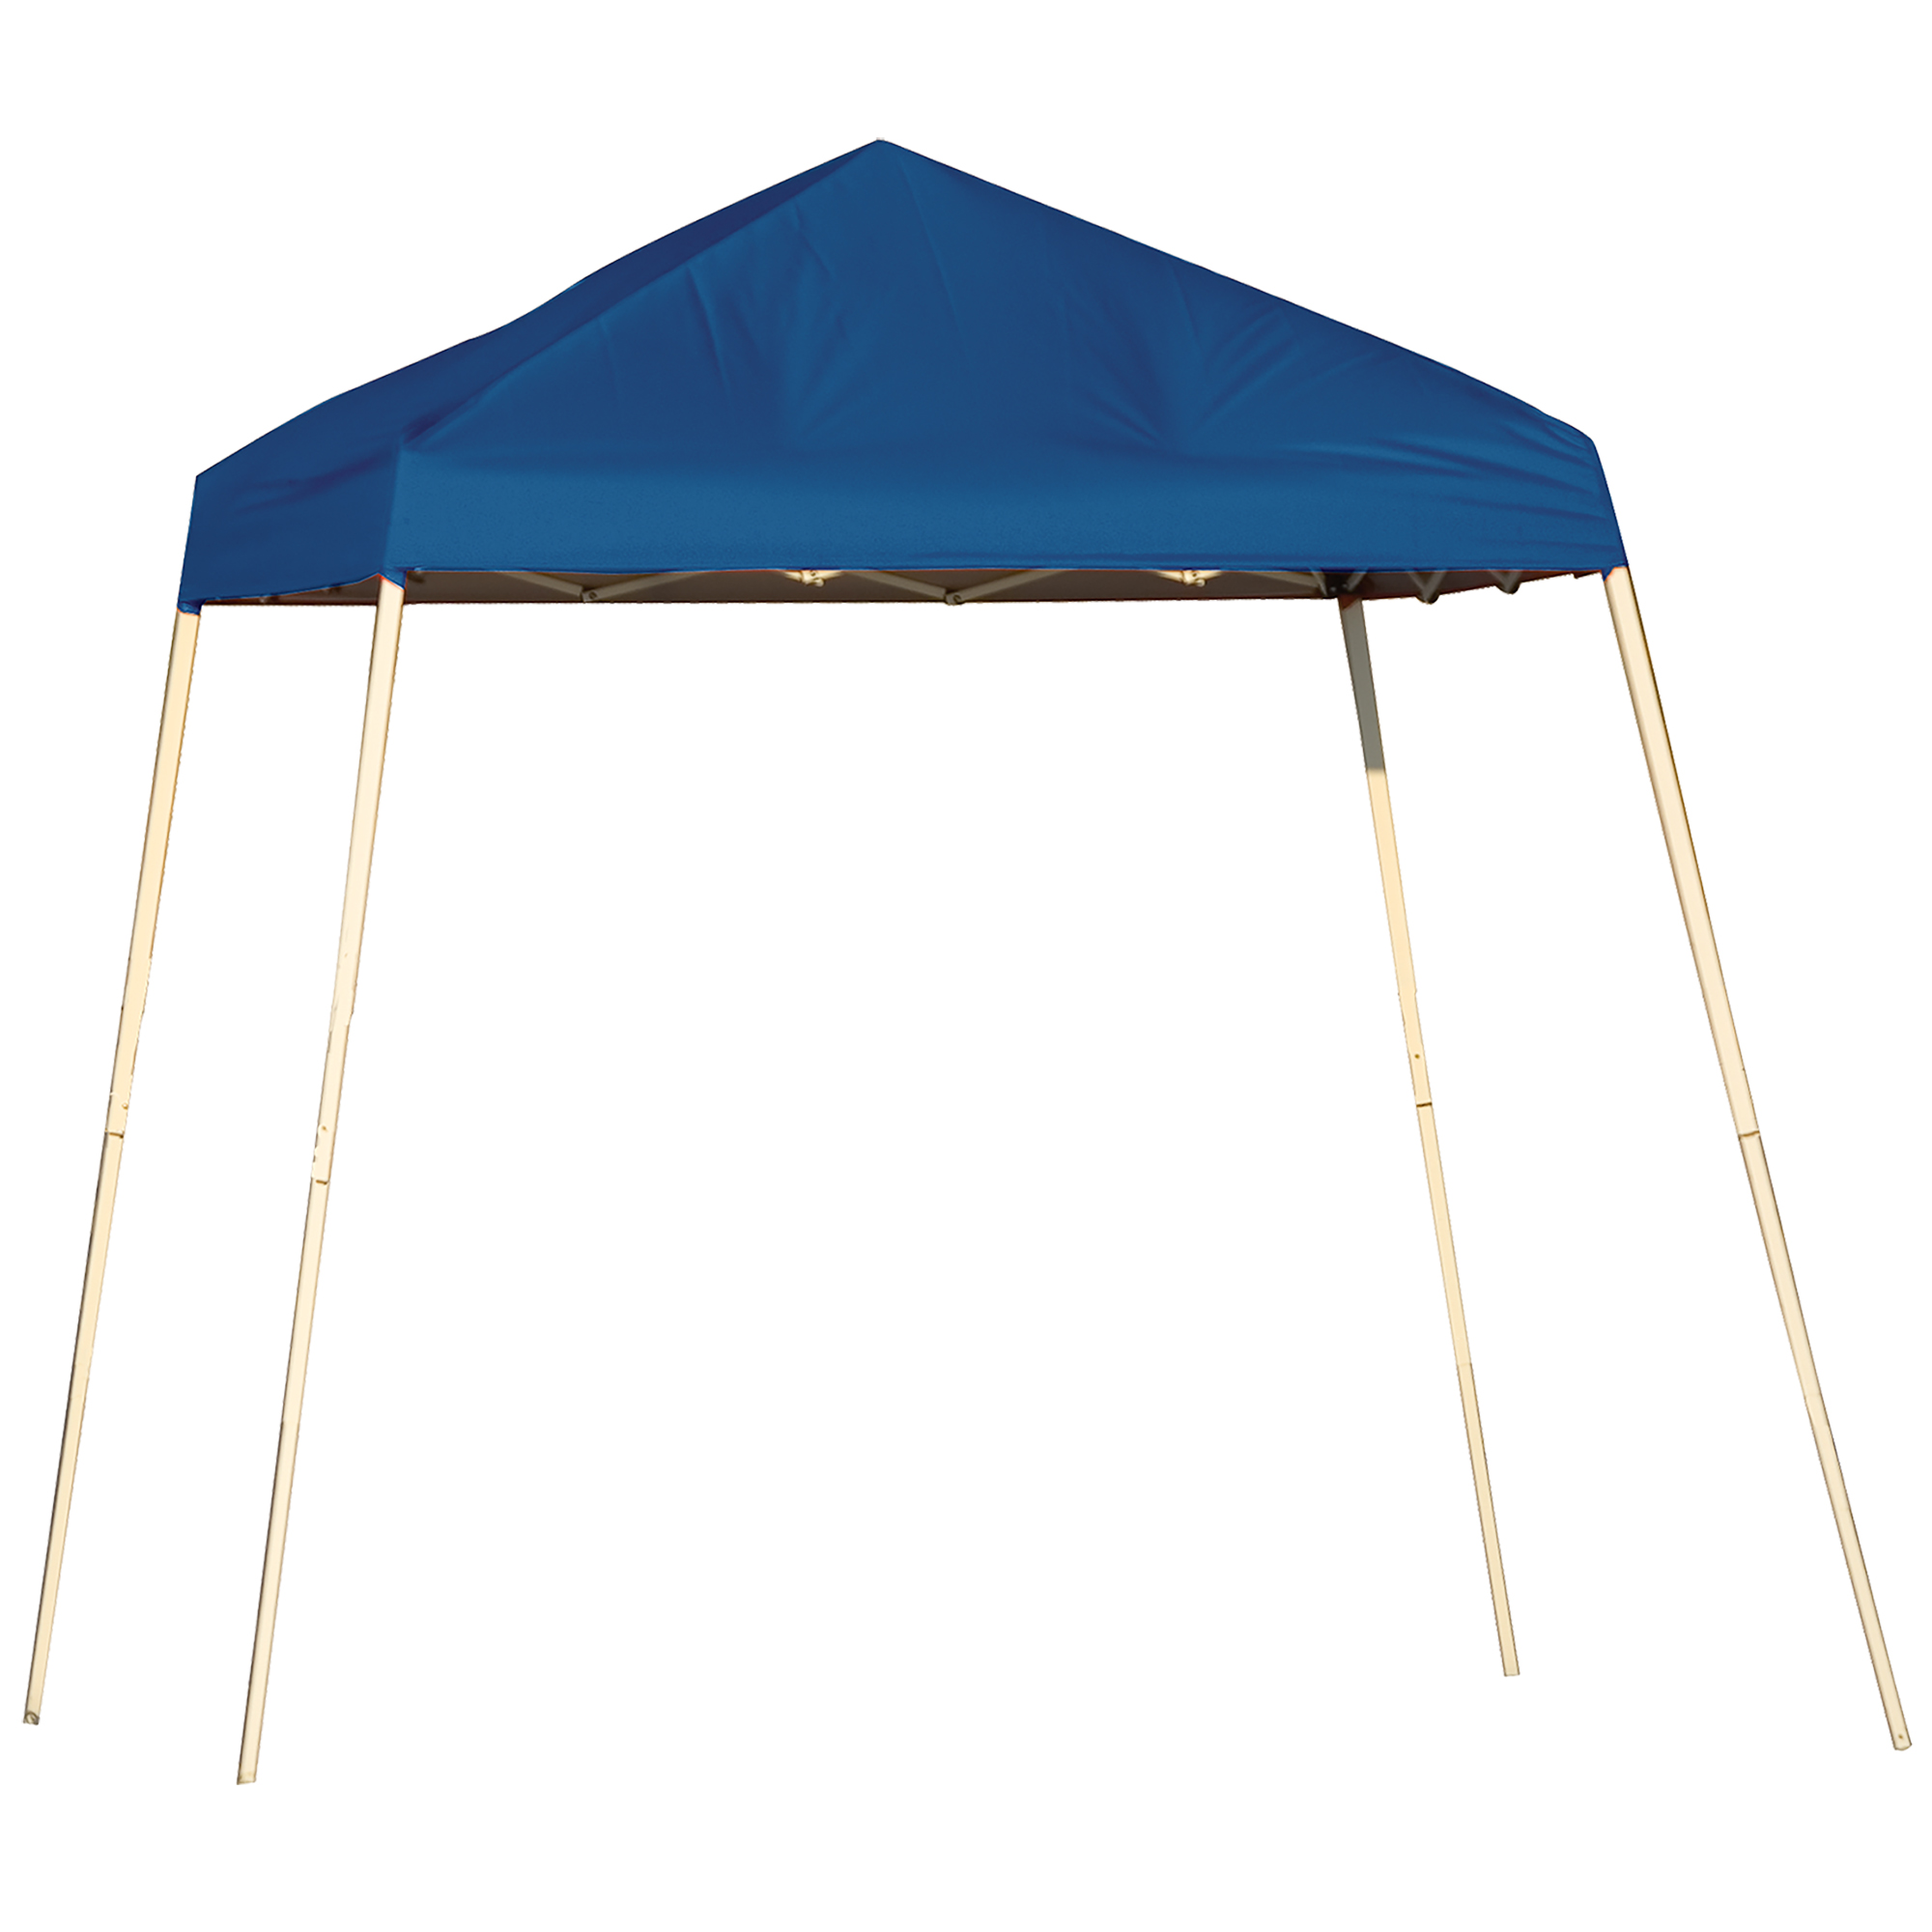 8 Ft. X 8 Ft. Sport Pop-up Canopy Slant Leg, Blue Cover